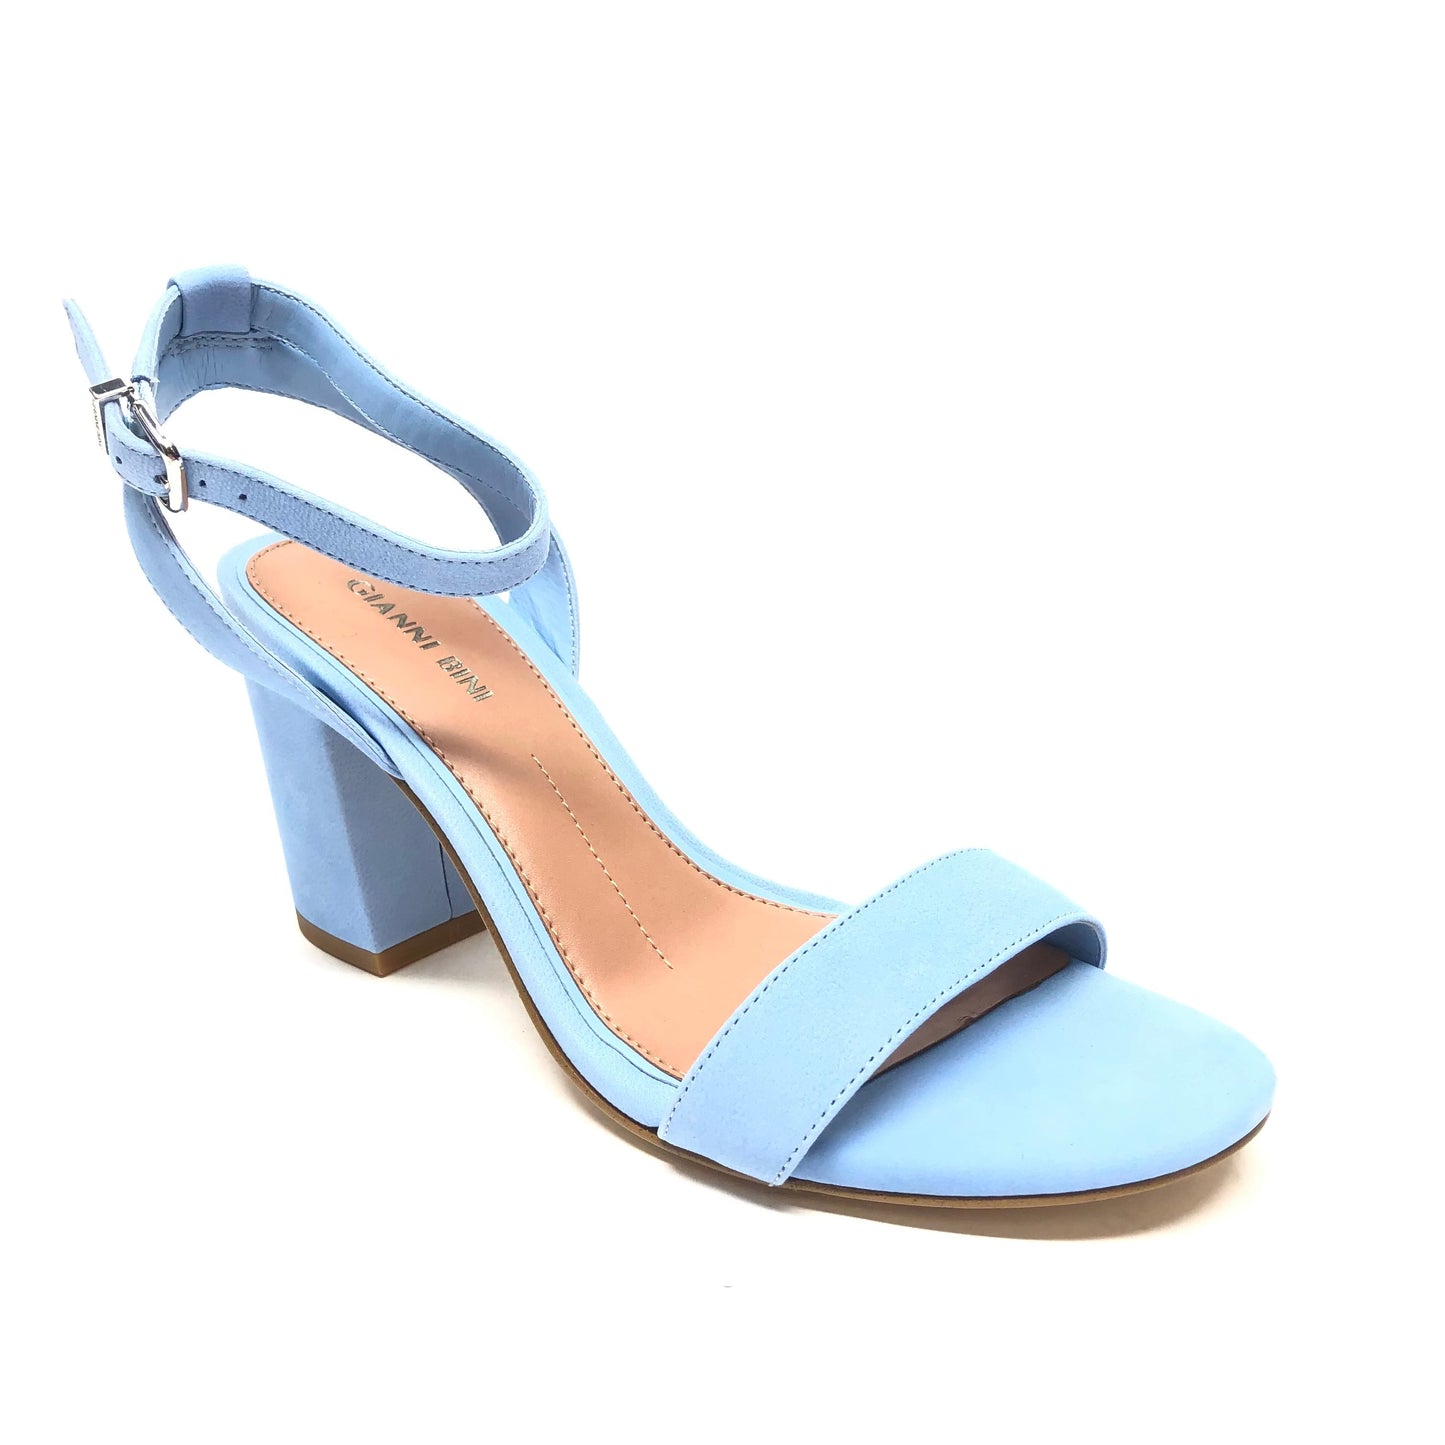 Blue Sandals Heels Block Gianni Bini, Size 8.5